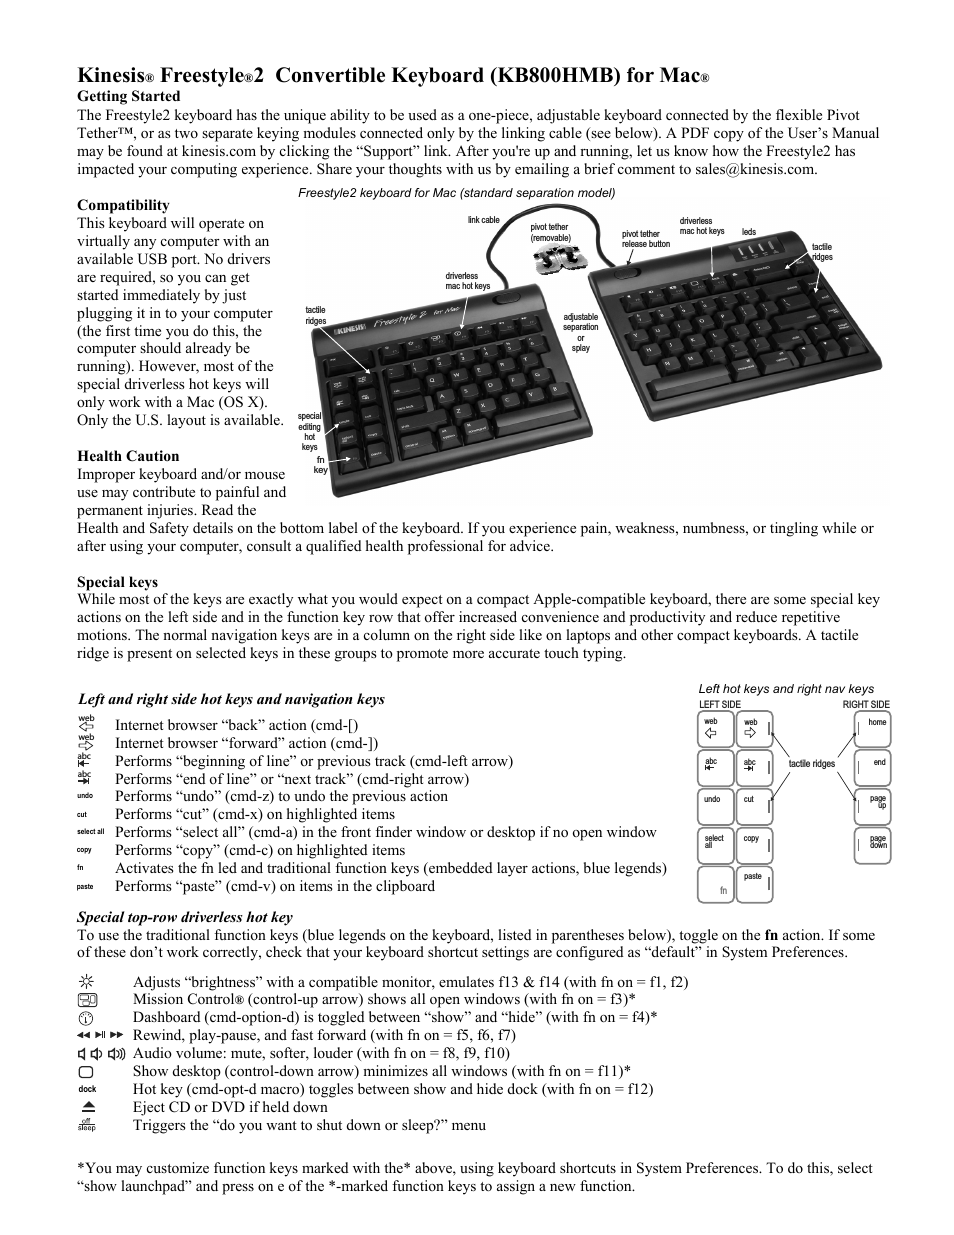 KB800HMB Freestyle2 Keyboard for Mac